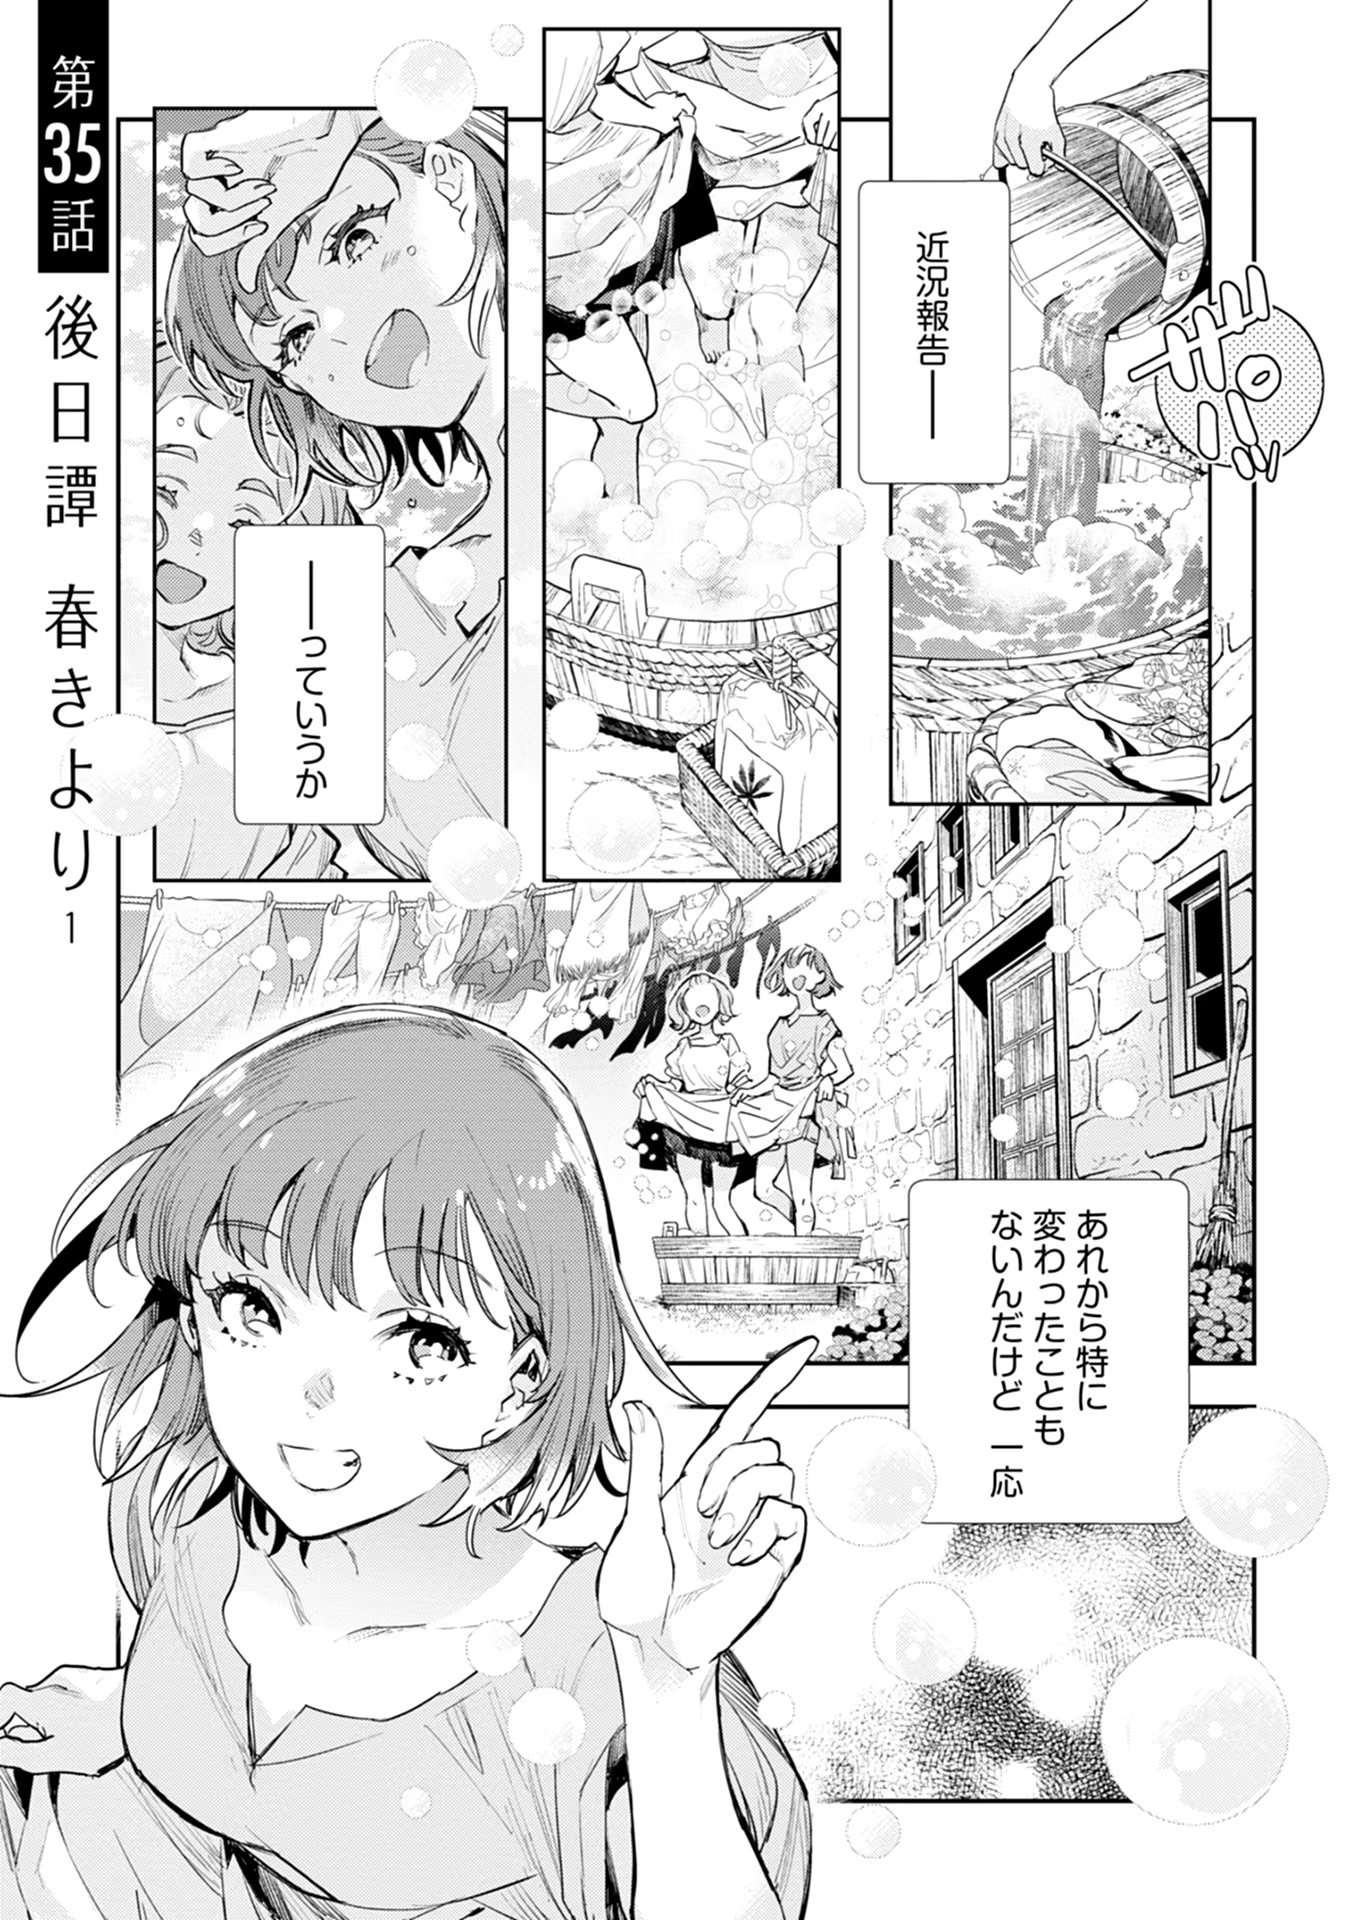 JK Haru Wa Isekai De Shoufu Ni Natta - Chapter 35 - Page 1